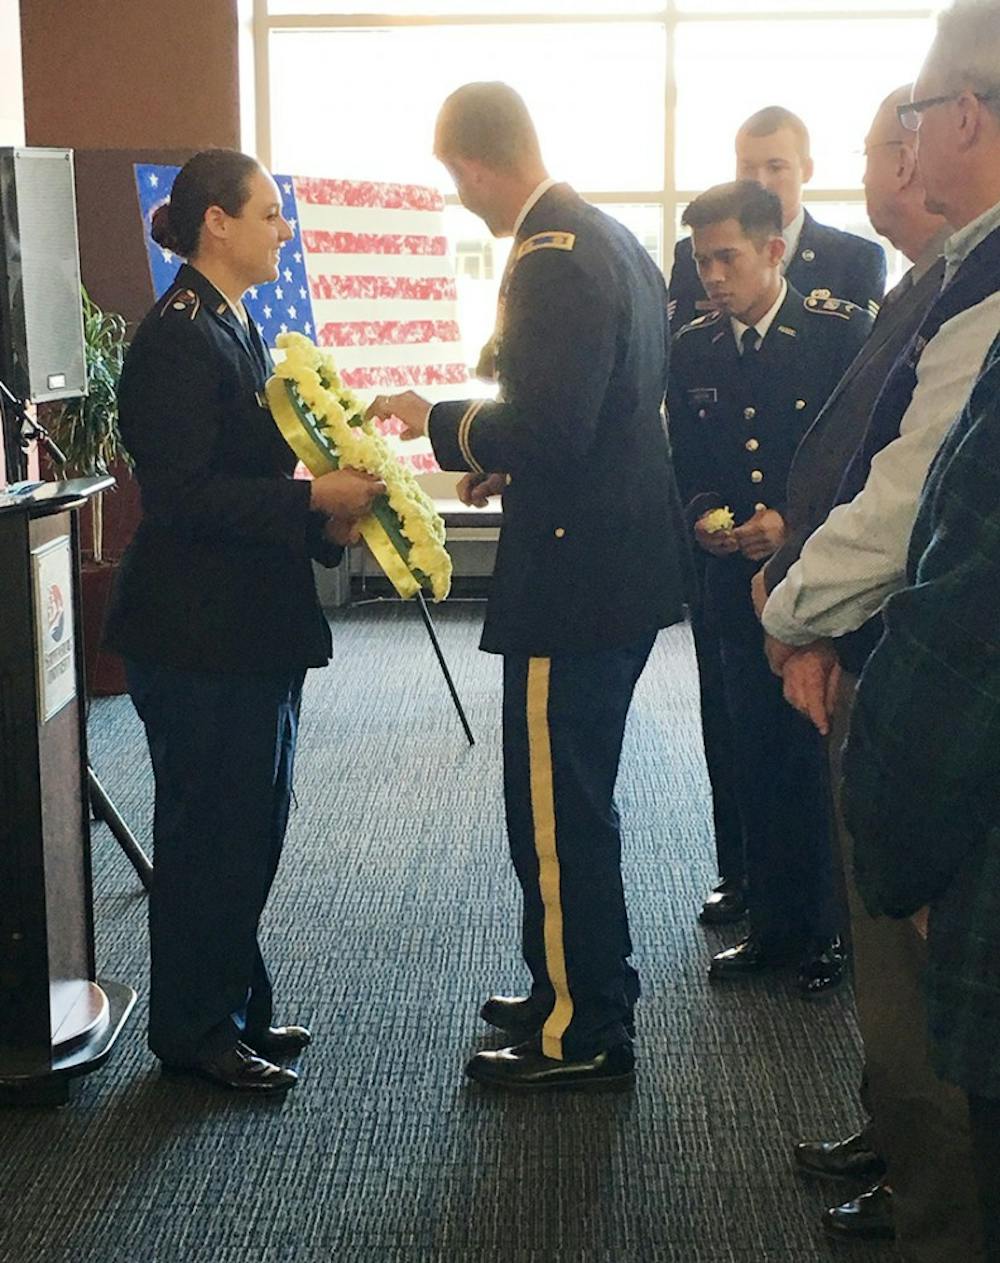 Annual ceremony honors veterans